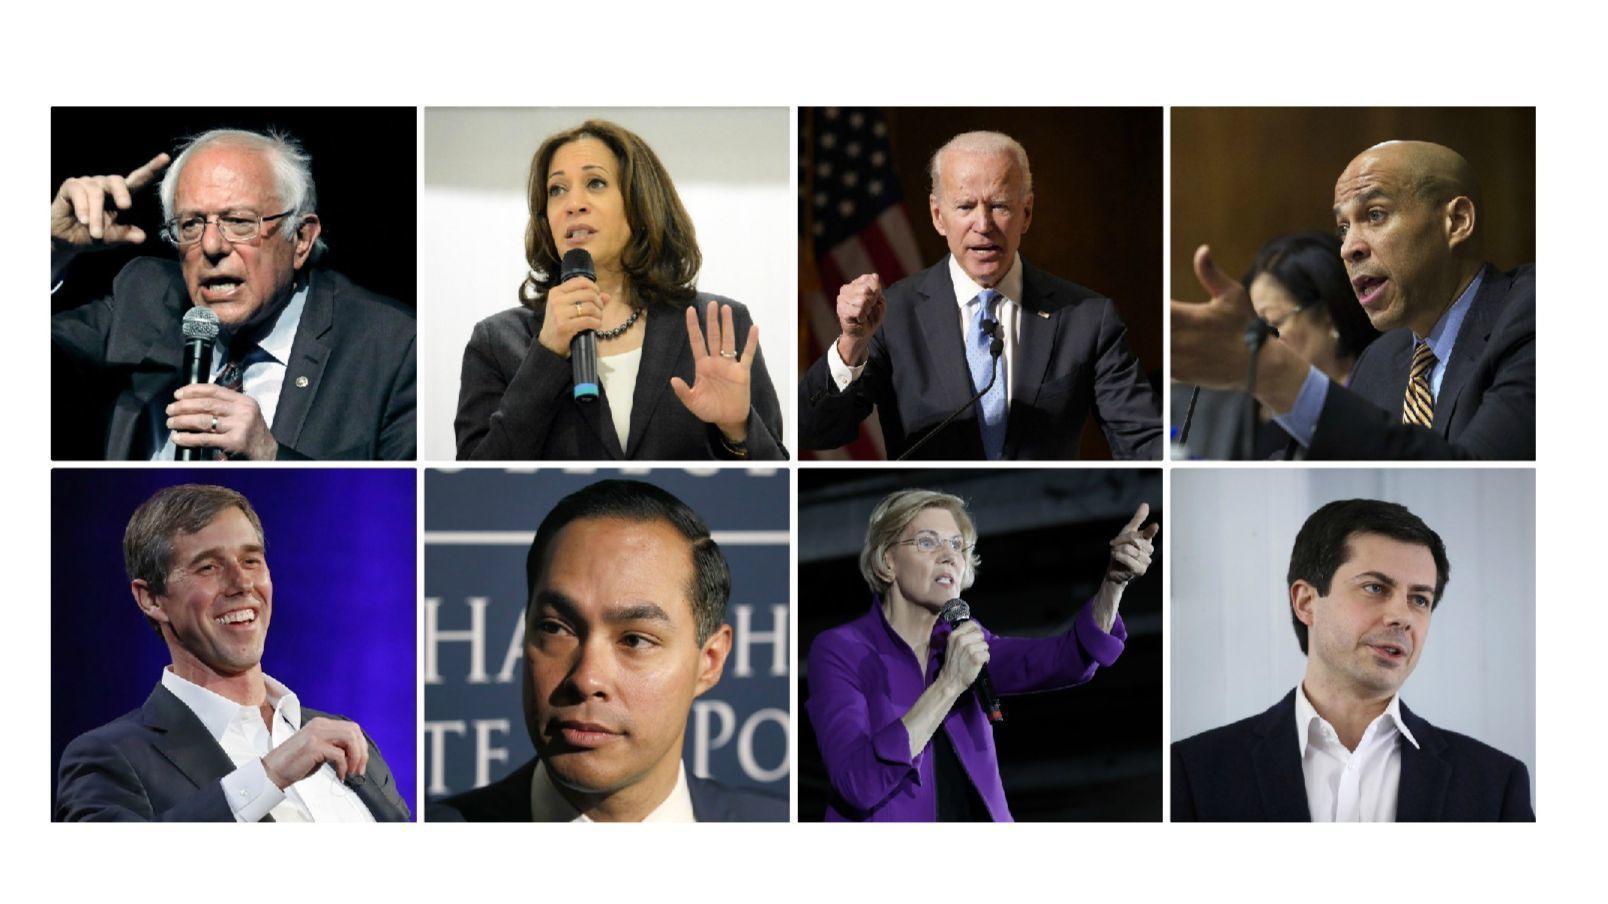 Miami will host first 2020 Democratic presidential debates in June - Orlando Sentinel1608 x 904